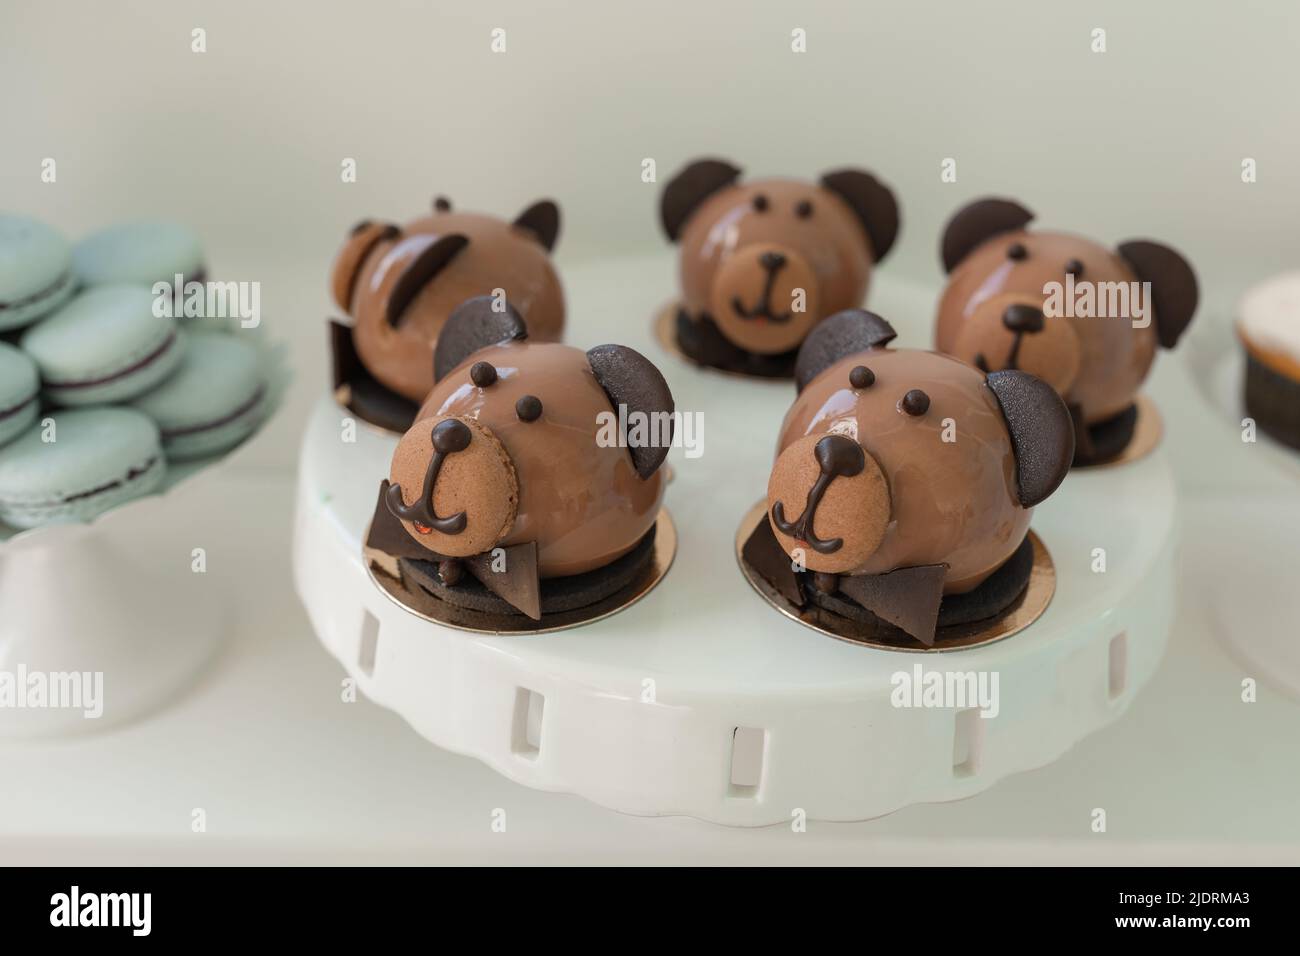 How The Bear's Chocolate Cake Was Created